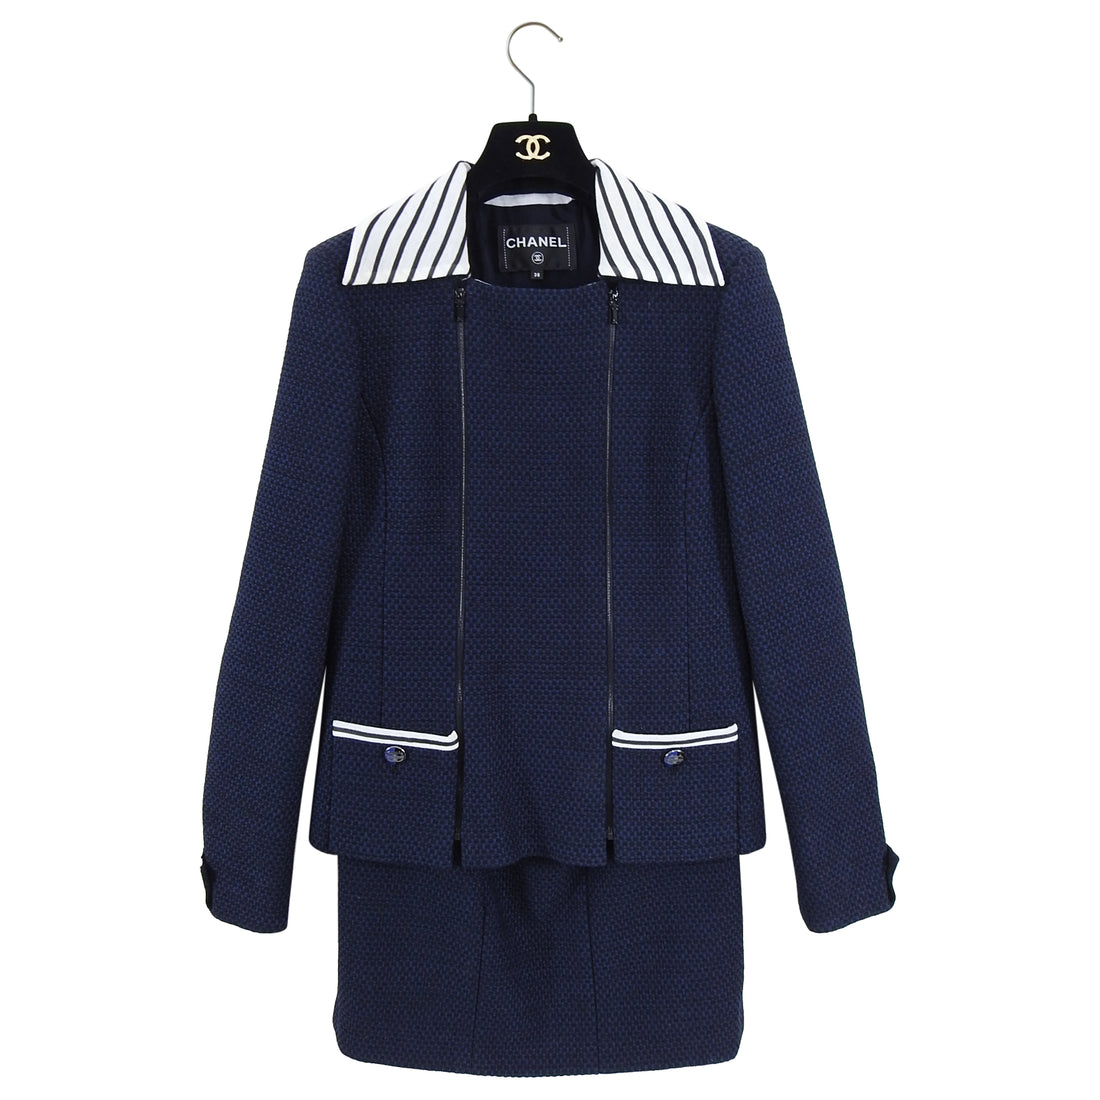 Chanel 02A Leather Trim Tweed Jacket/Skirt Suit Set - Navy Multi